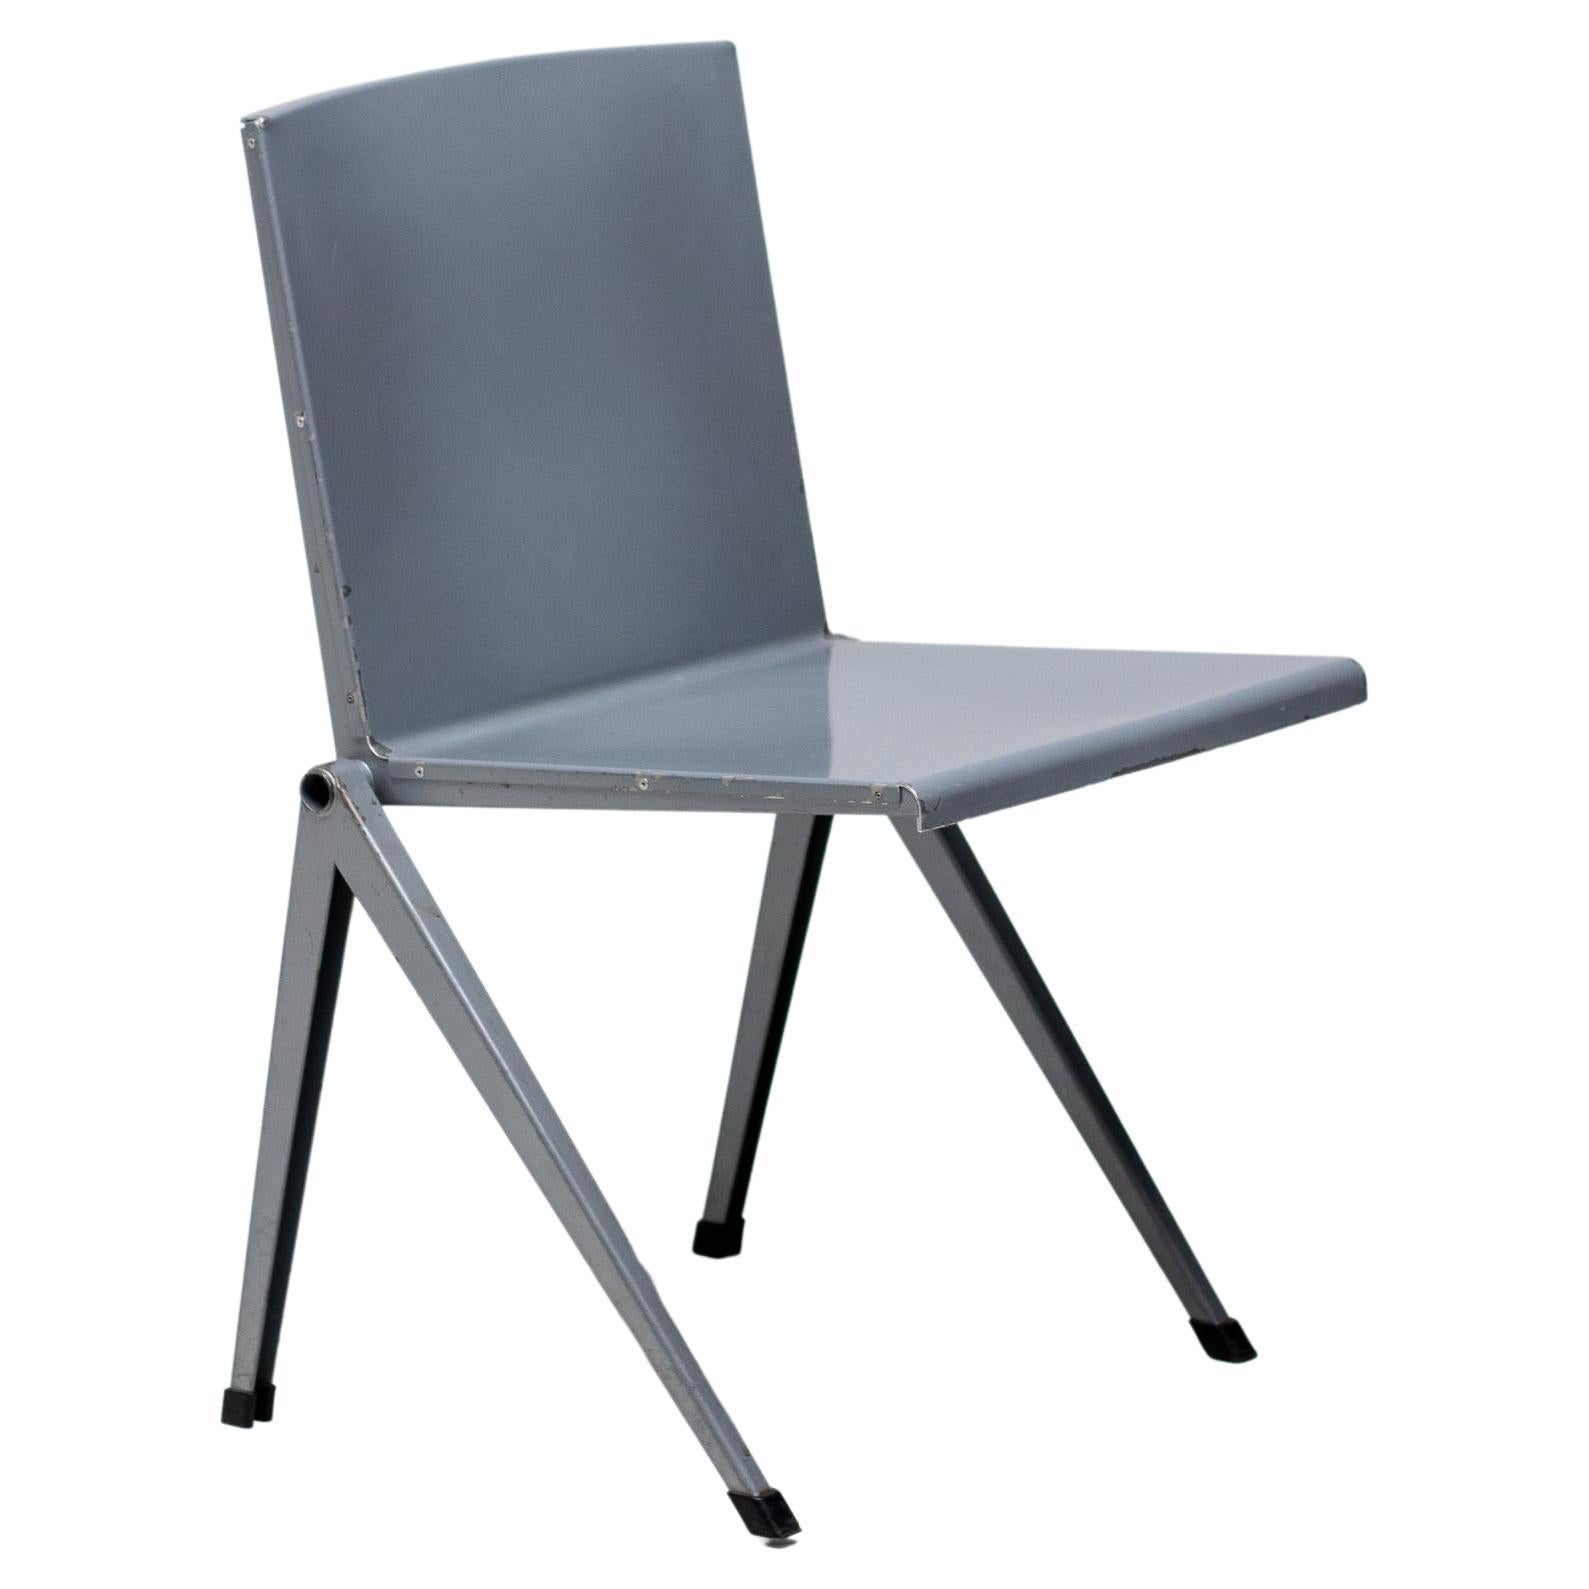 Gerrit Rietveld Mondial Chair